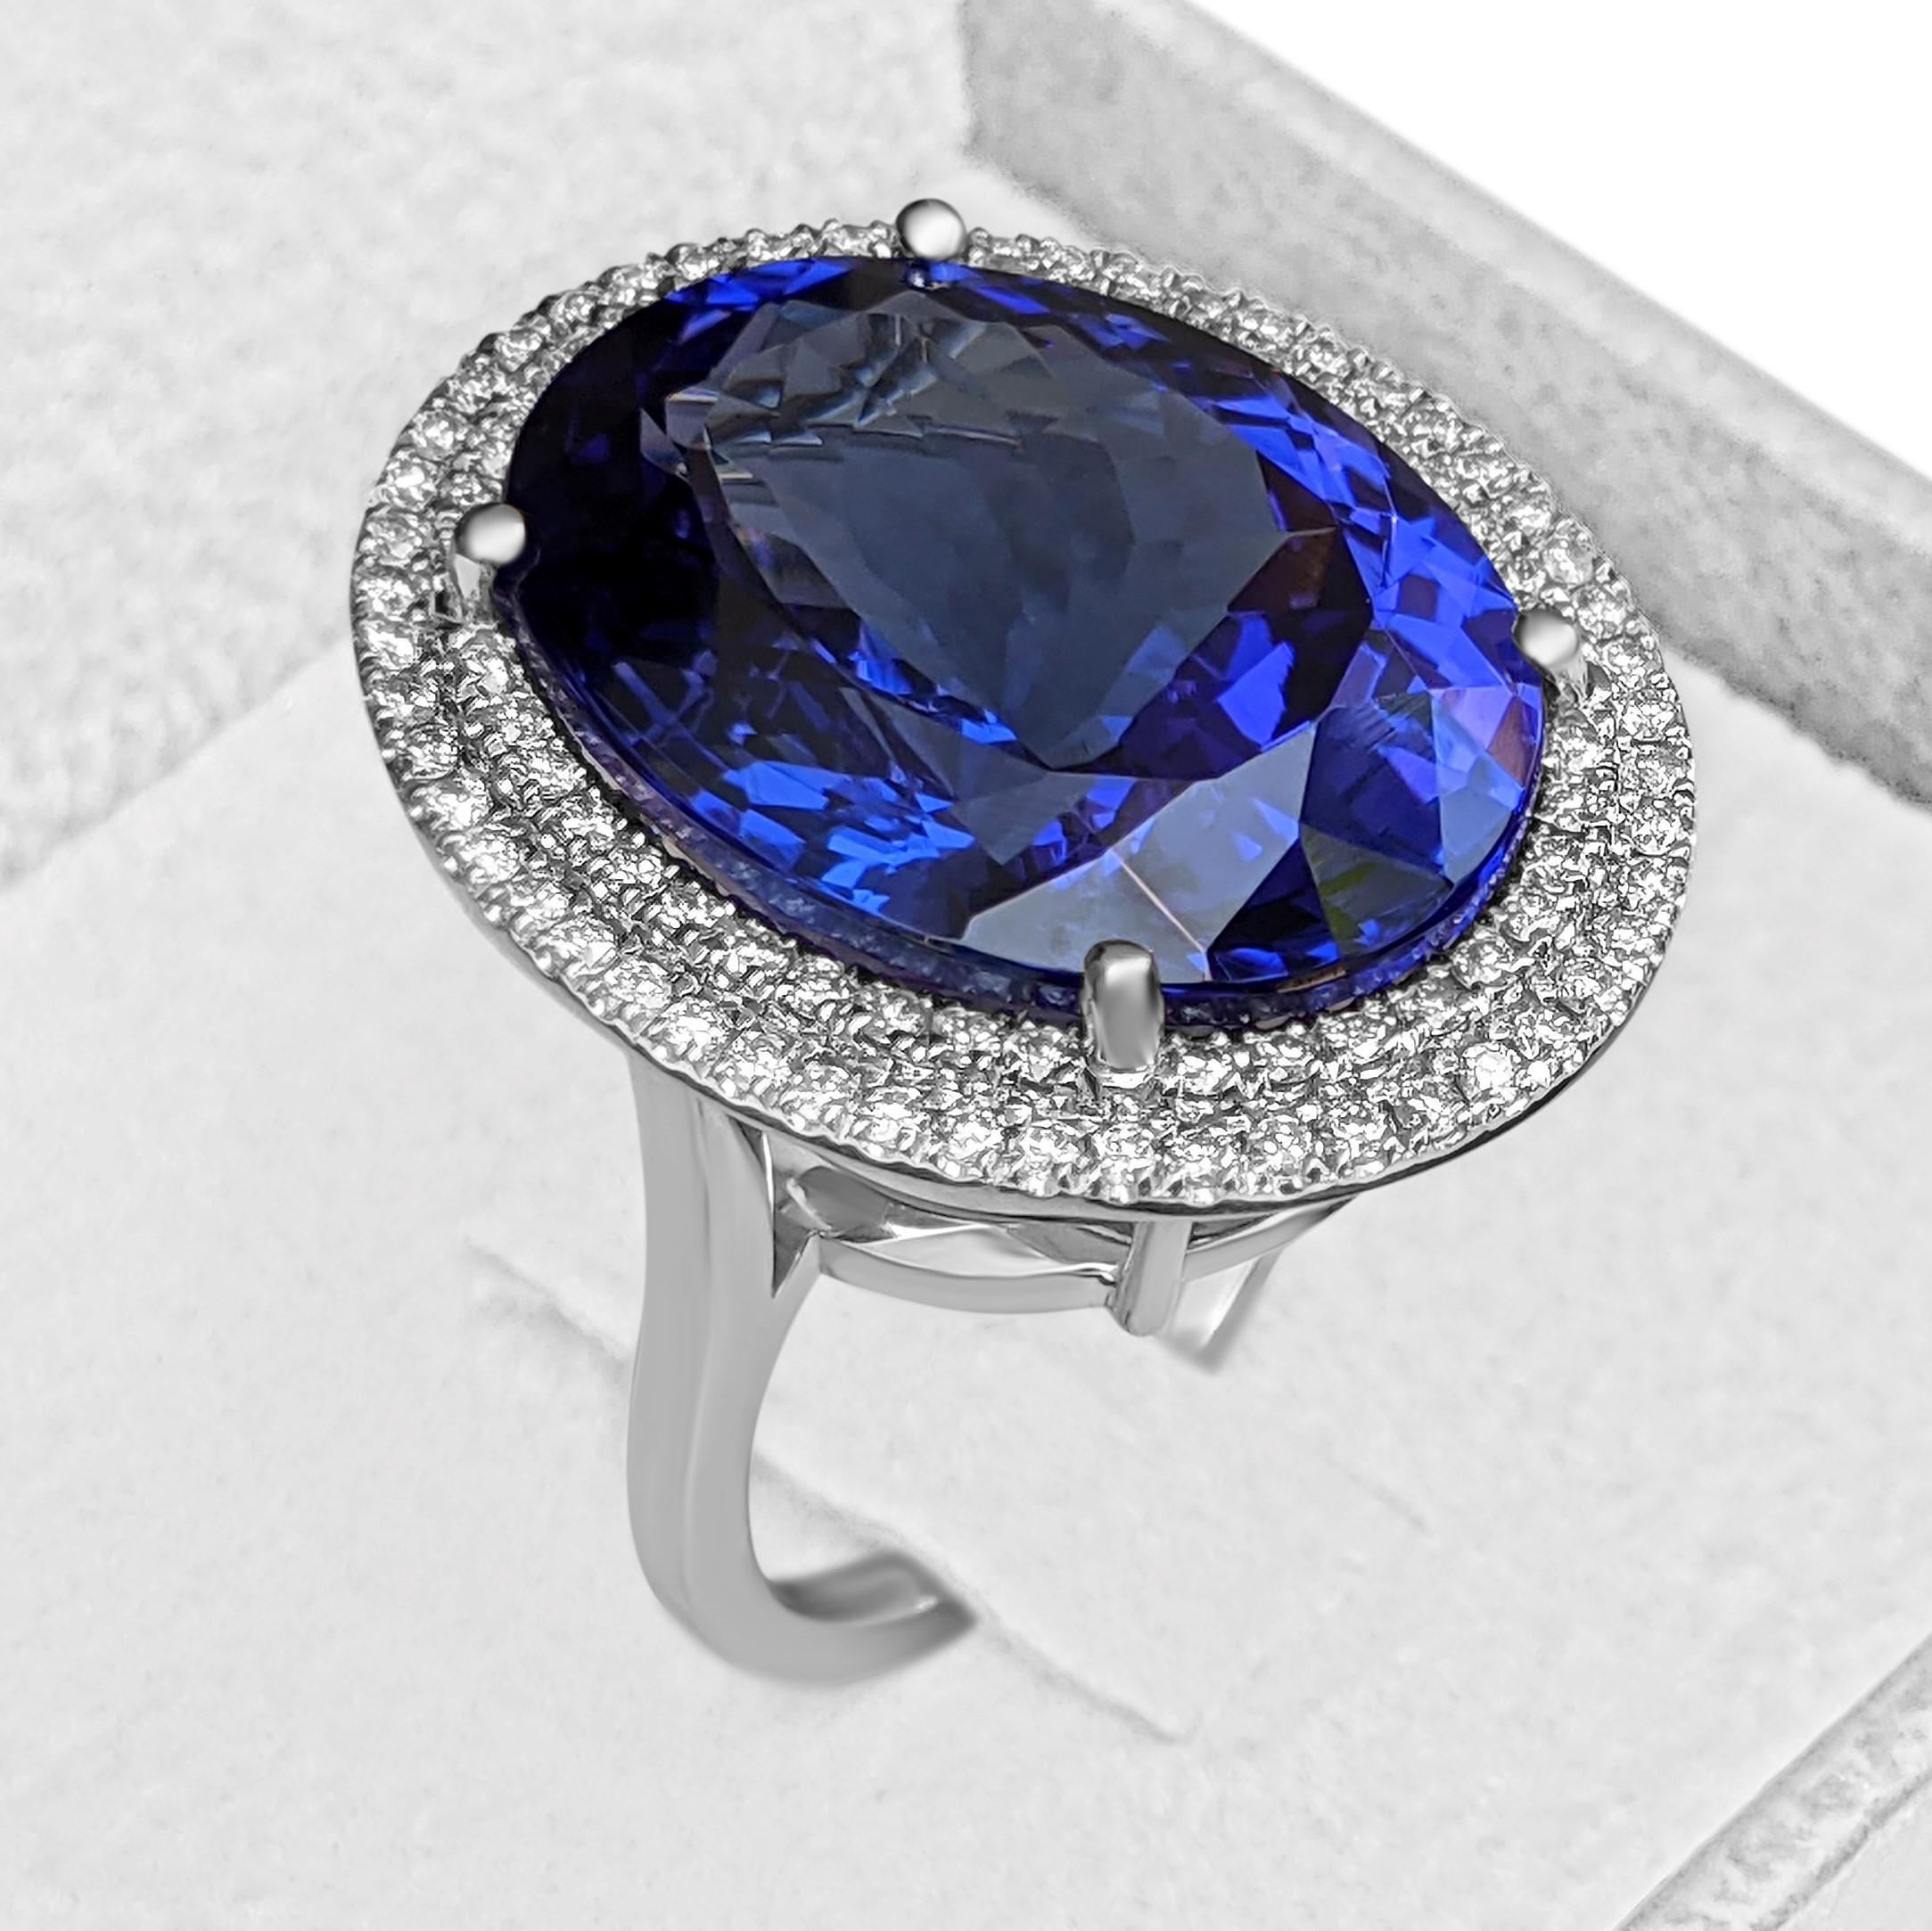 Oval Cut 25.65 Ct Violetish Blue Tanzanite & 0.90 Ct Diamonds, 18 Kt. White Gold, Ring